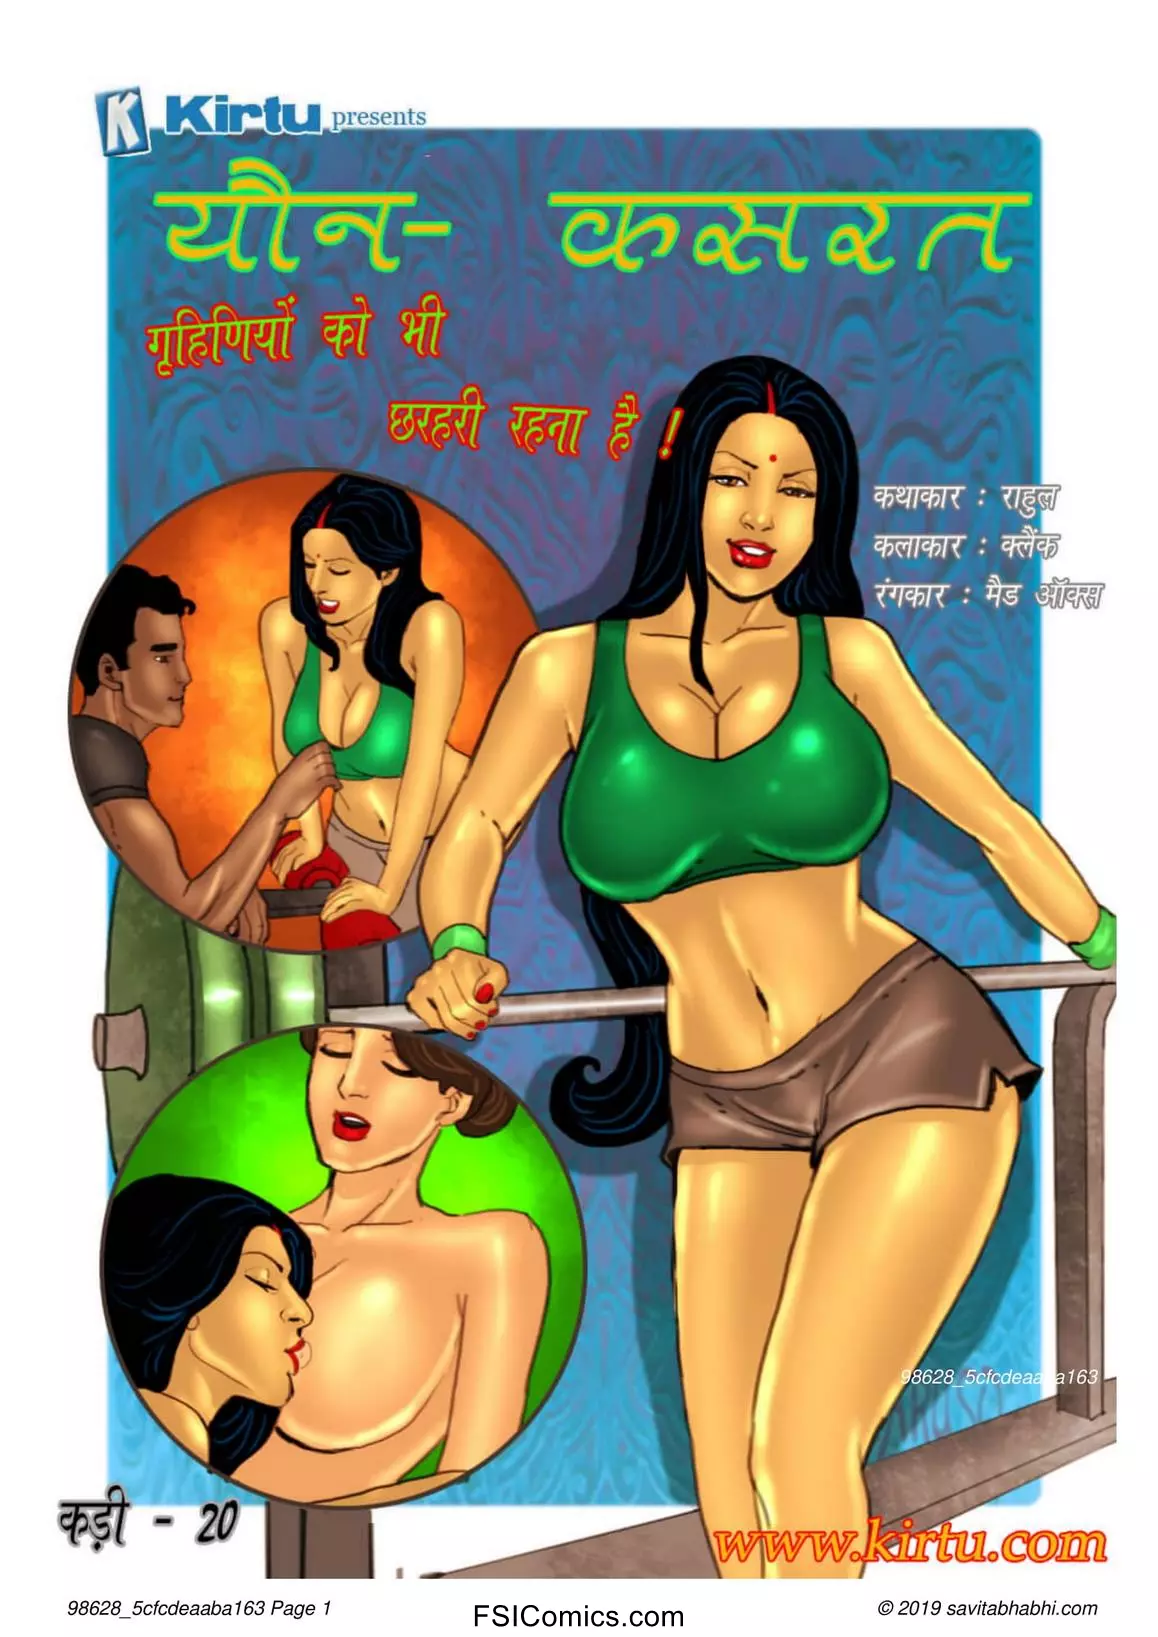 Savita Bhabhi Episode 20 Hindi – Youn Kasarat (यौन-कसरत) - 68 - Fsicomics